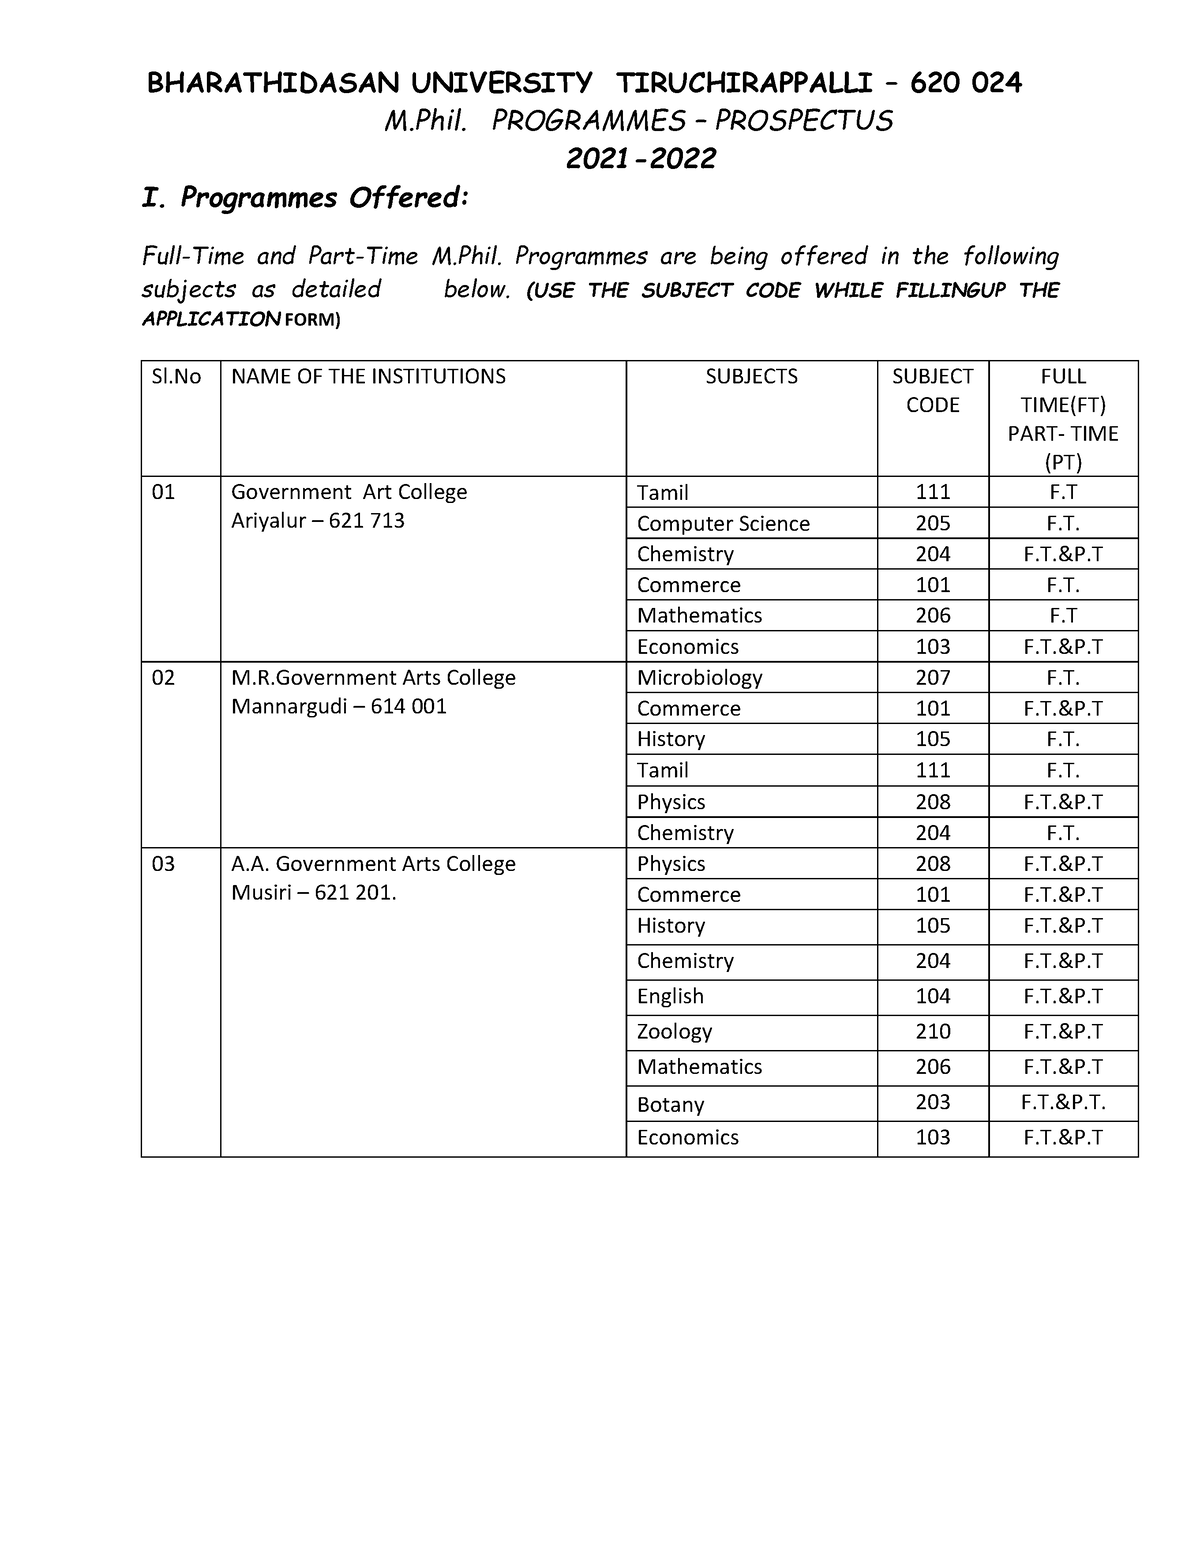 mphil thesis format bharathidasan university